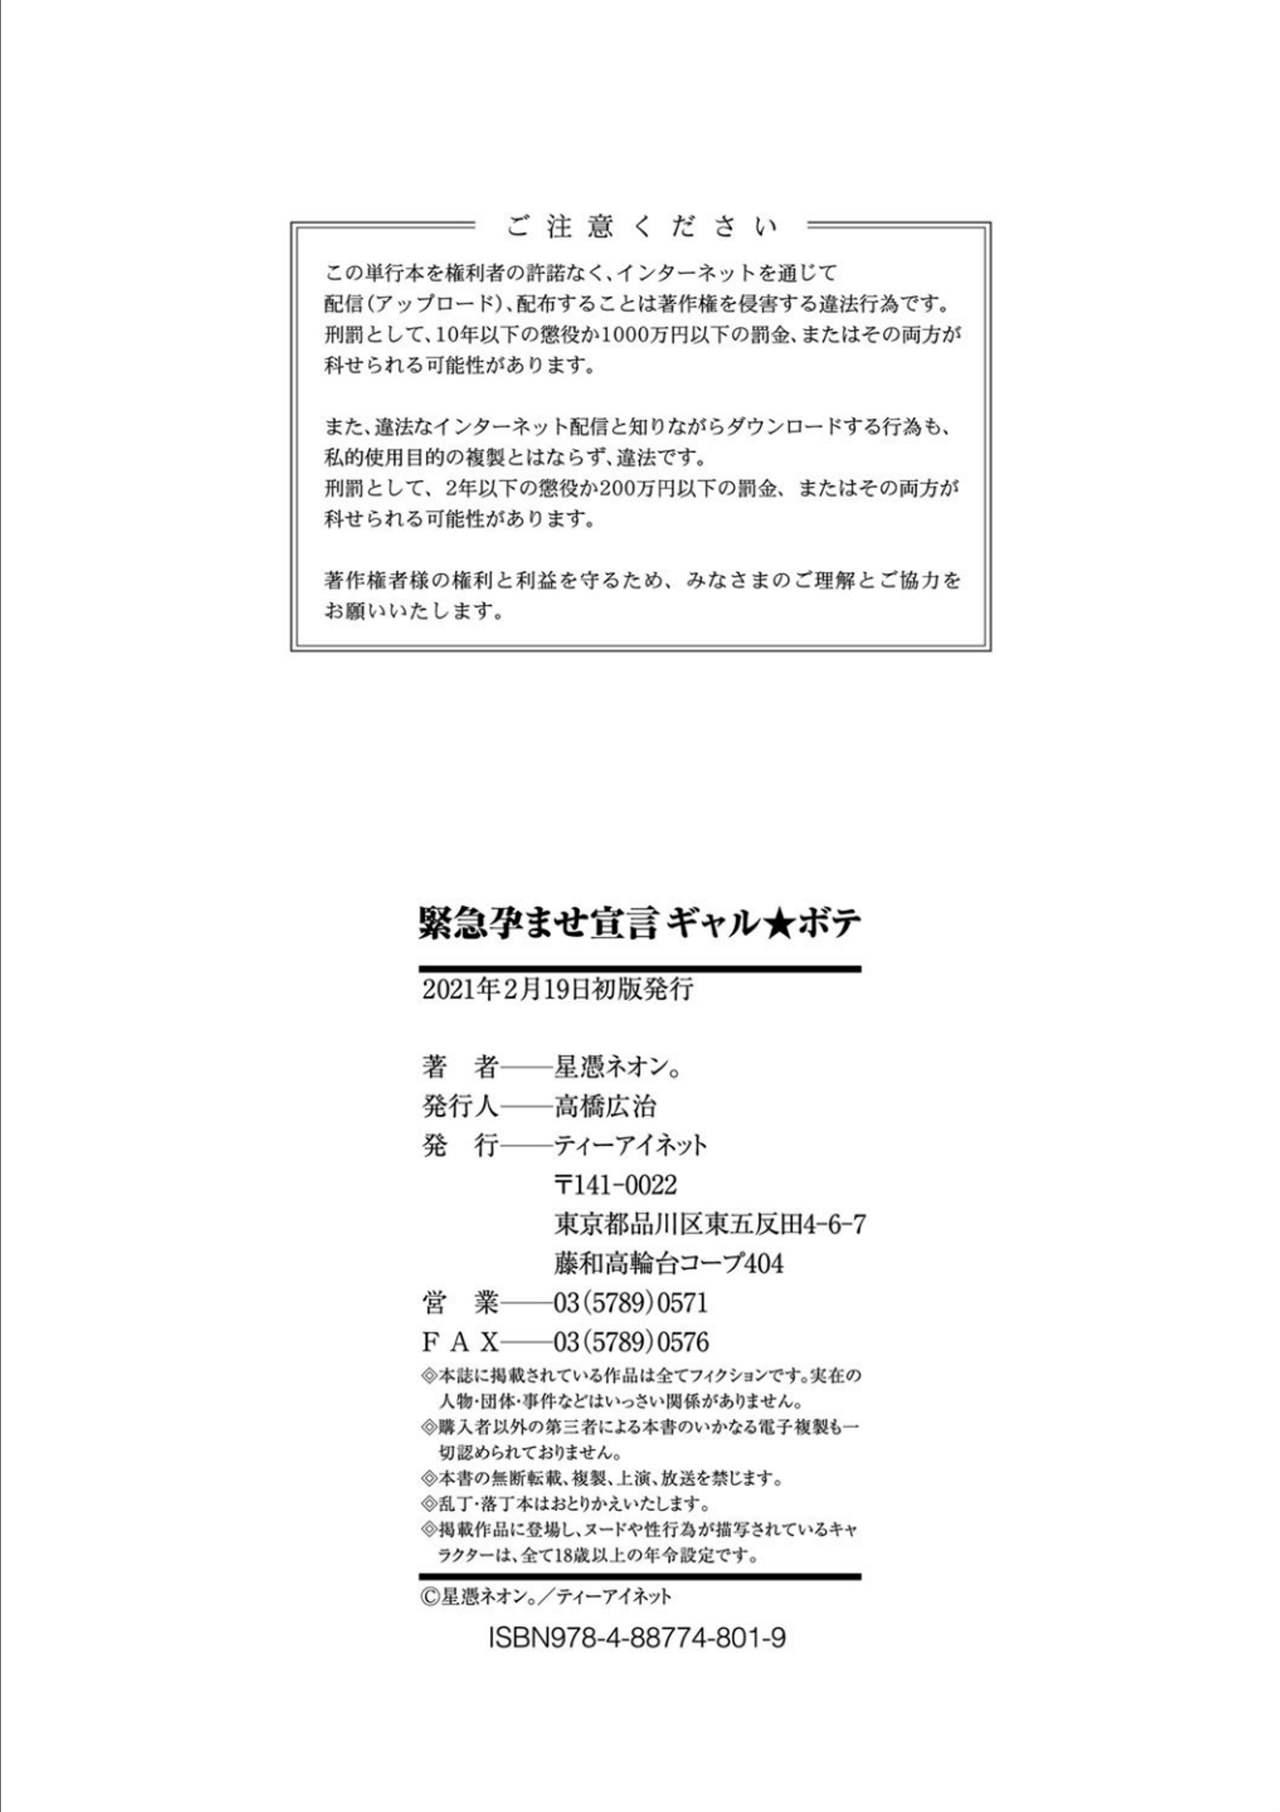 Kinkyuu Haramase Sengen Gal Bote - Emergency Pregnancy Declaration 207